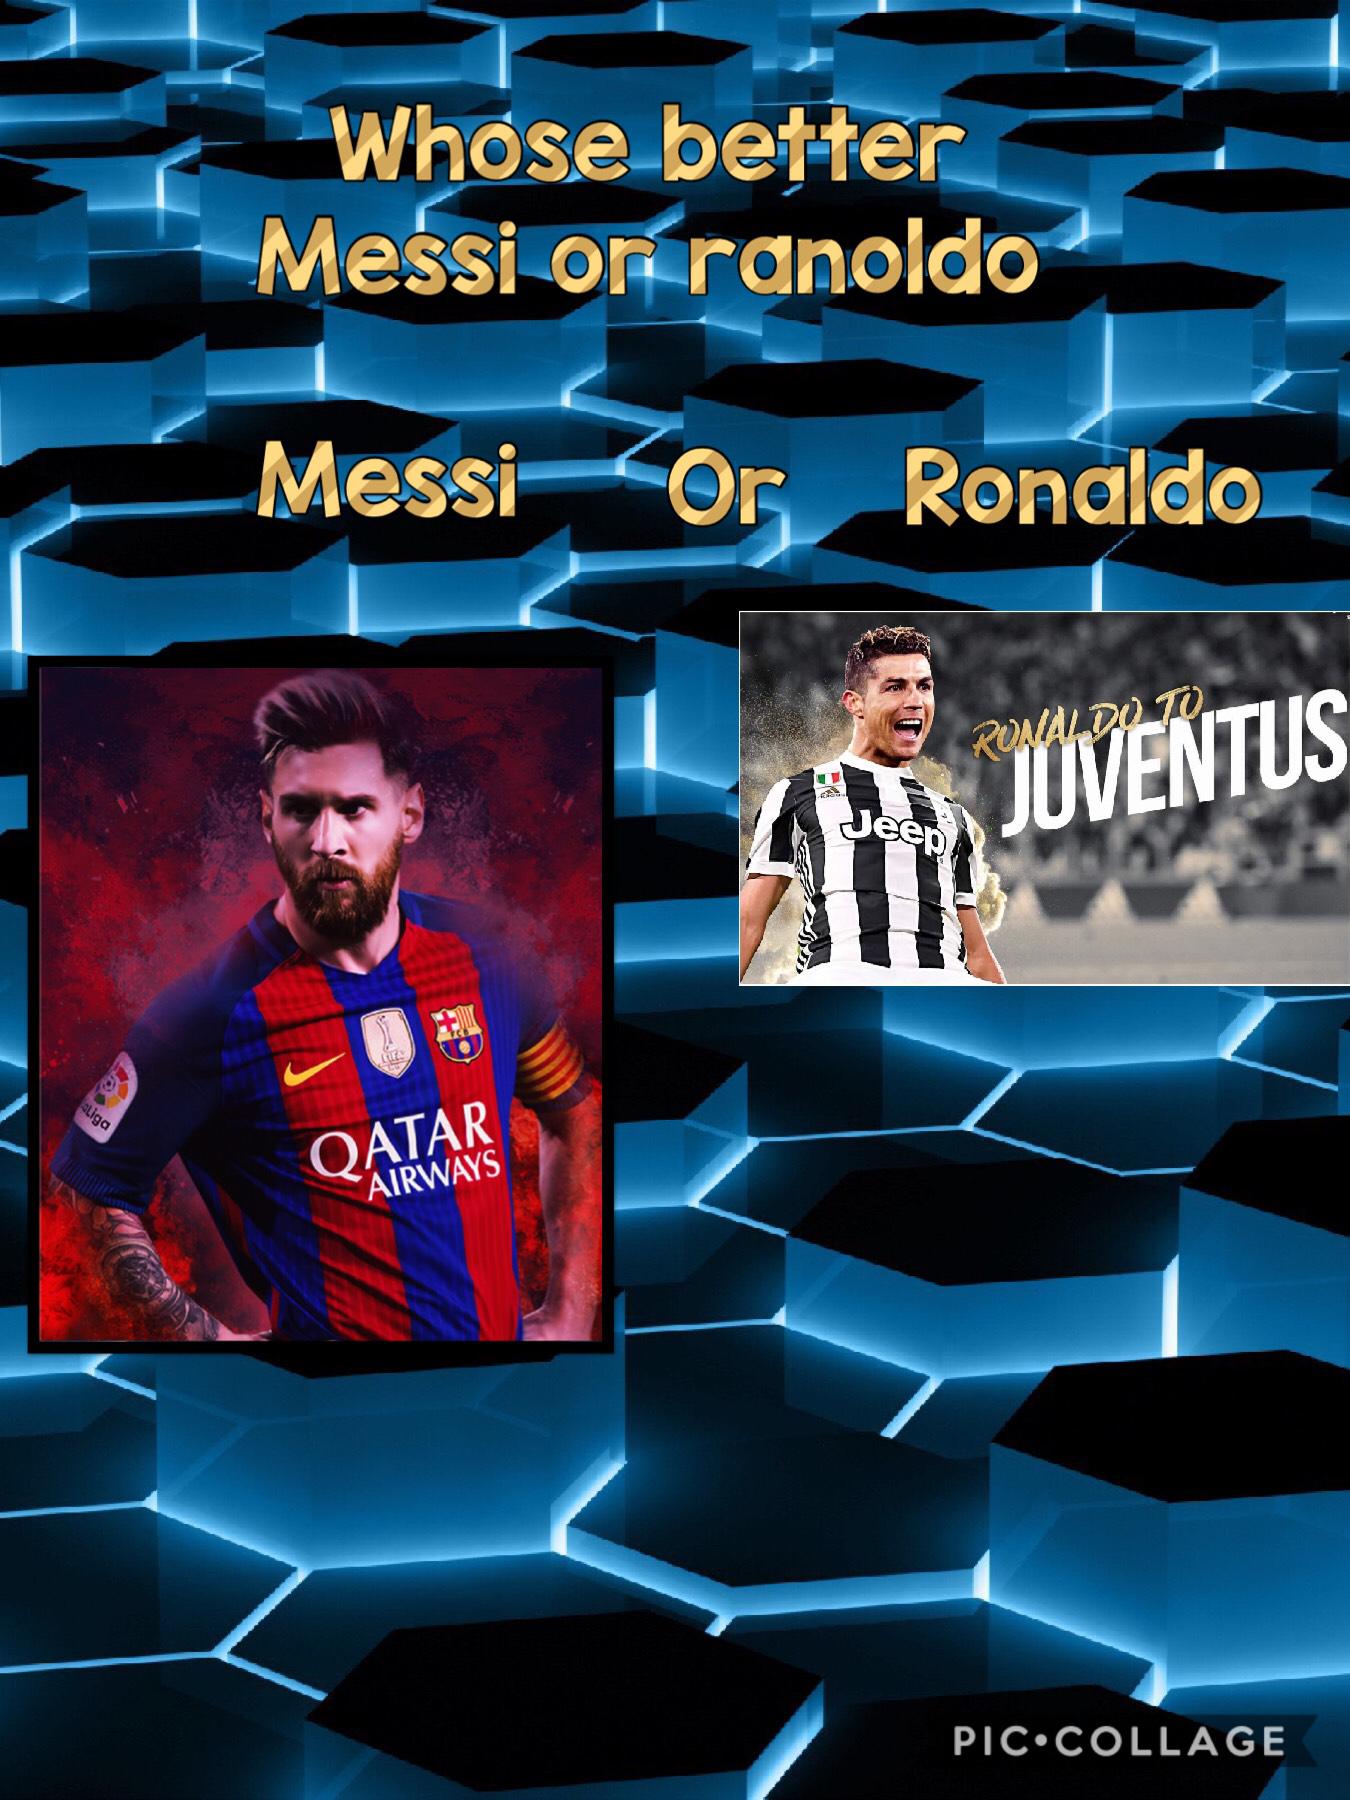 Messi or ronaldo